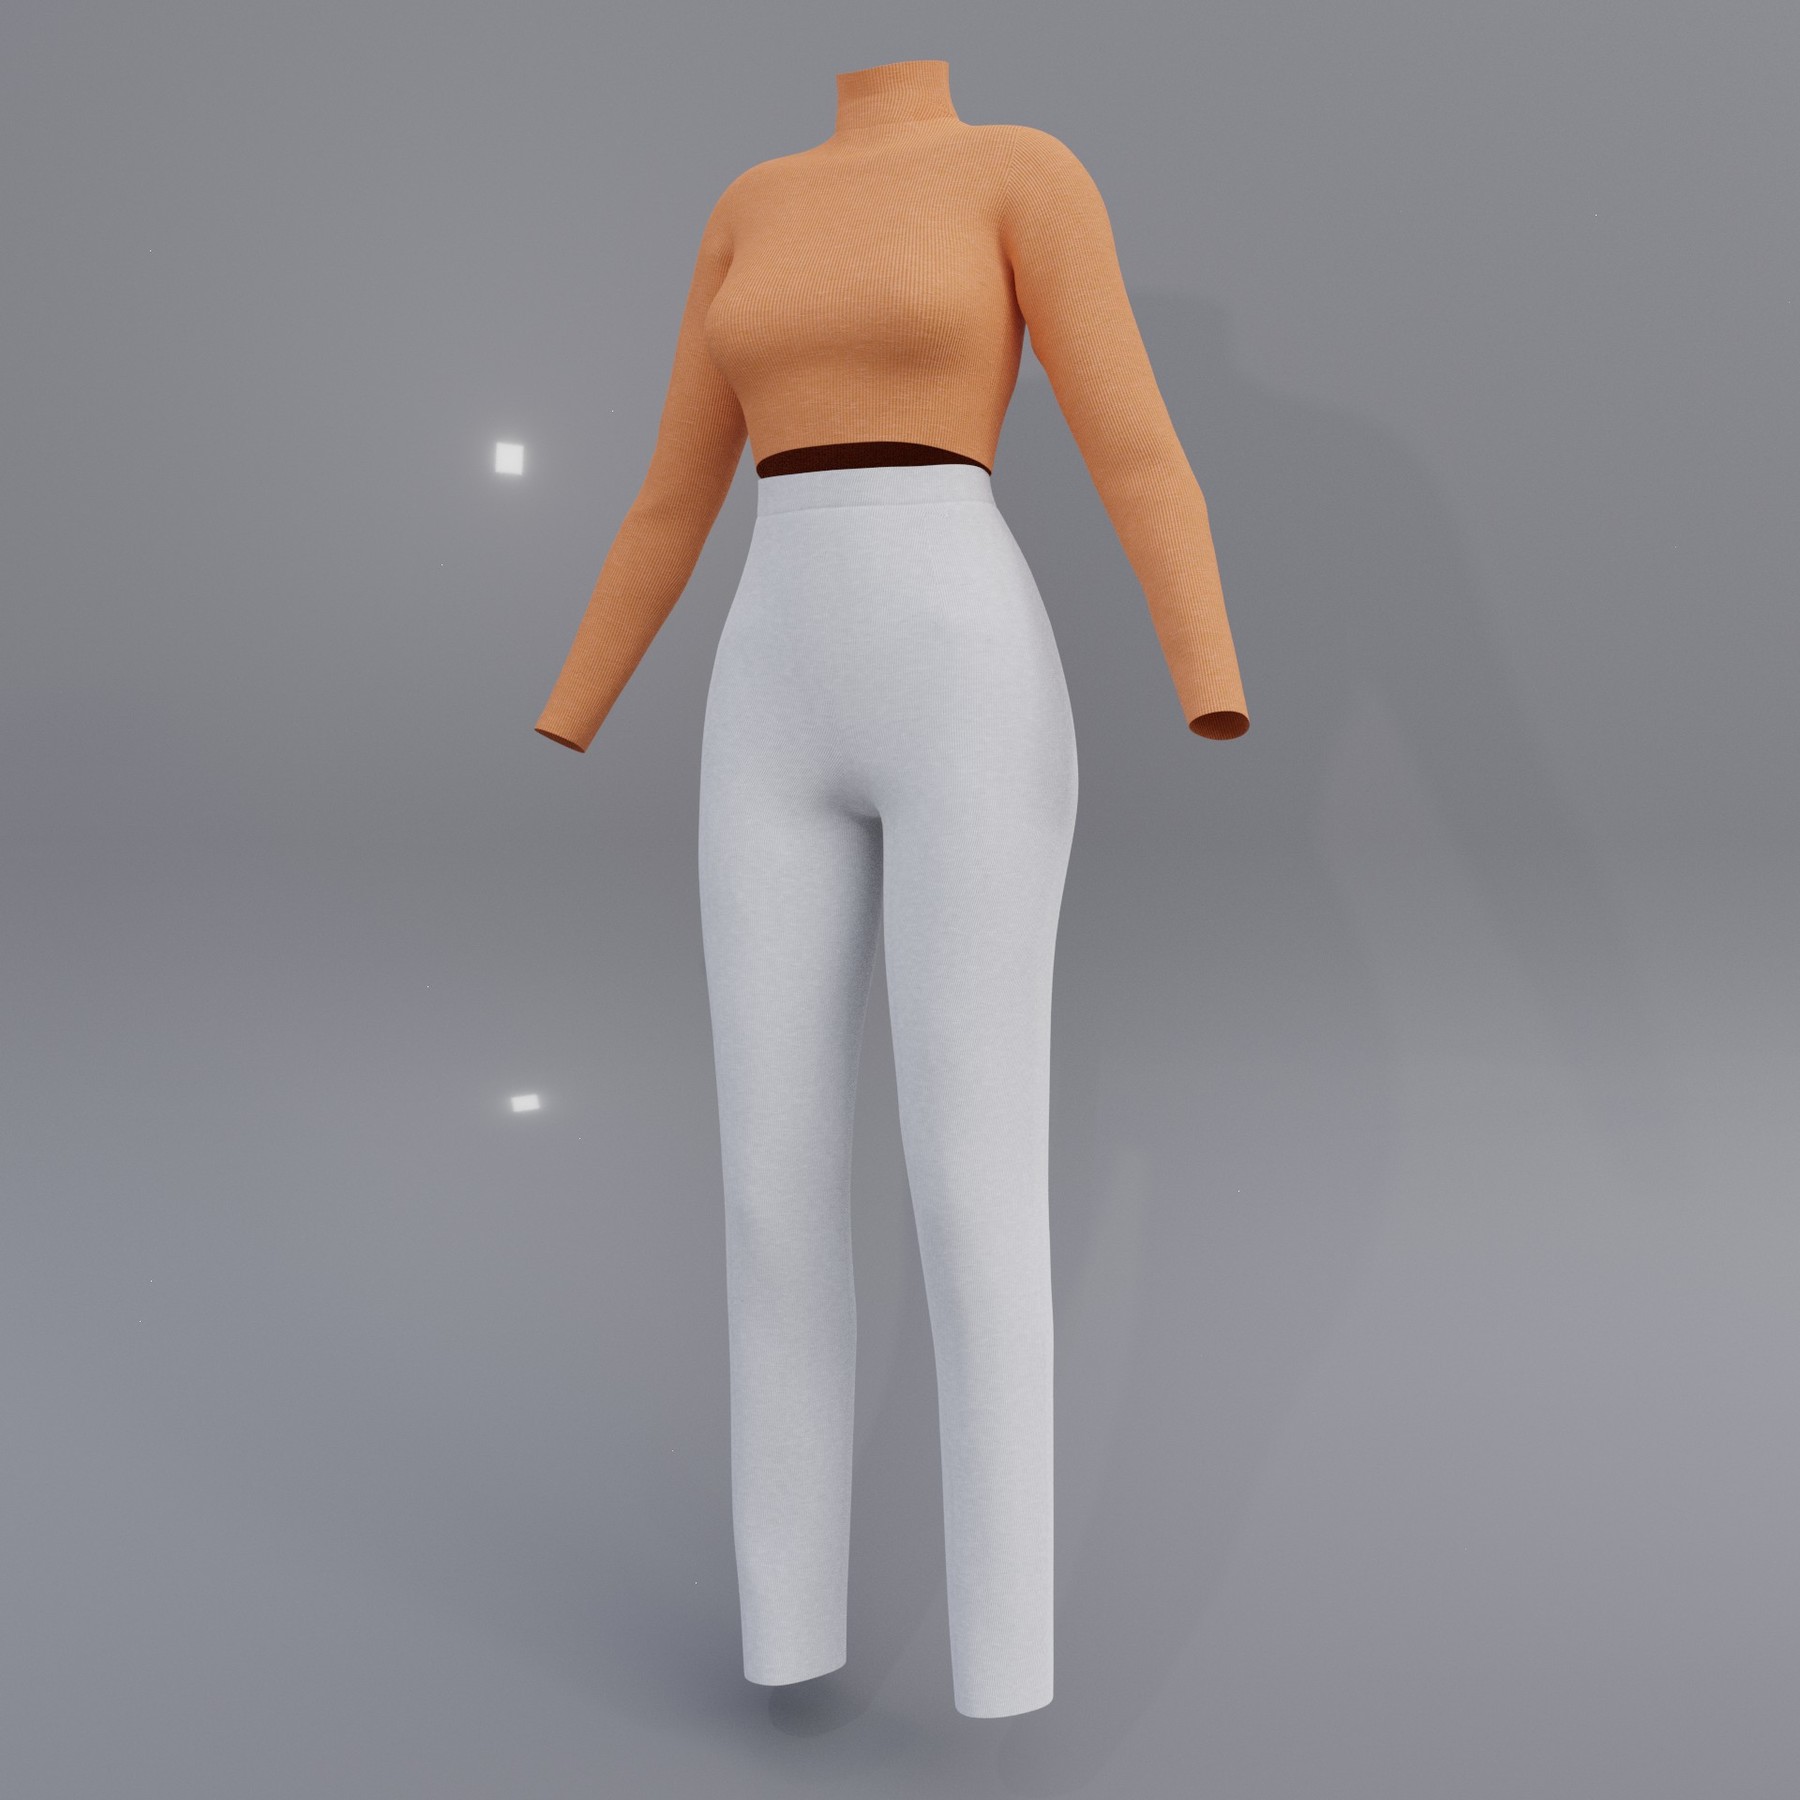 ArtStation - Female outfit - Turtleneck croptop and pants 3D model ...